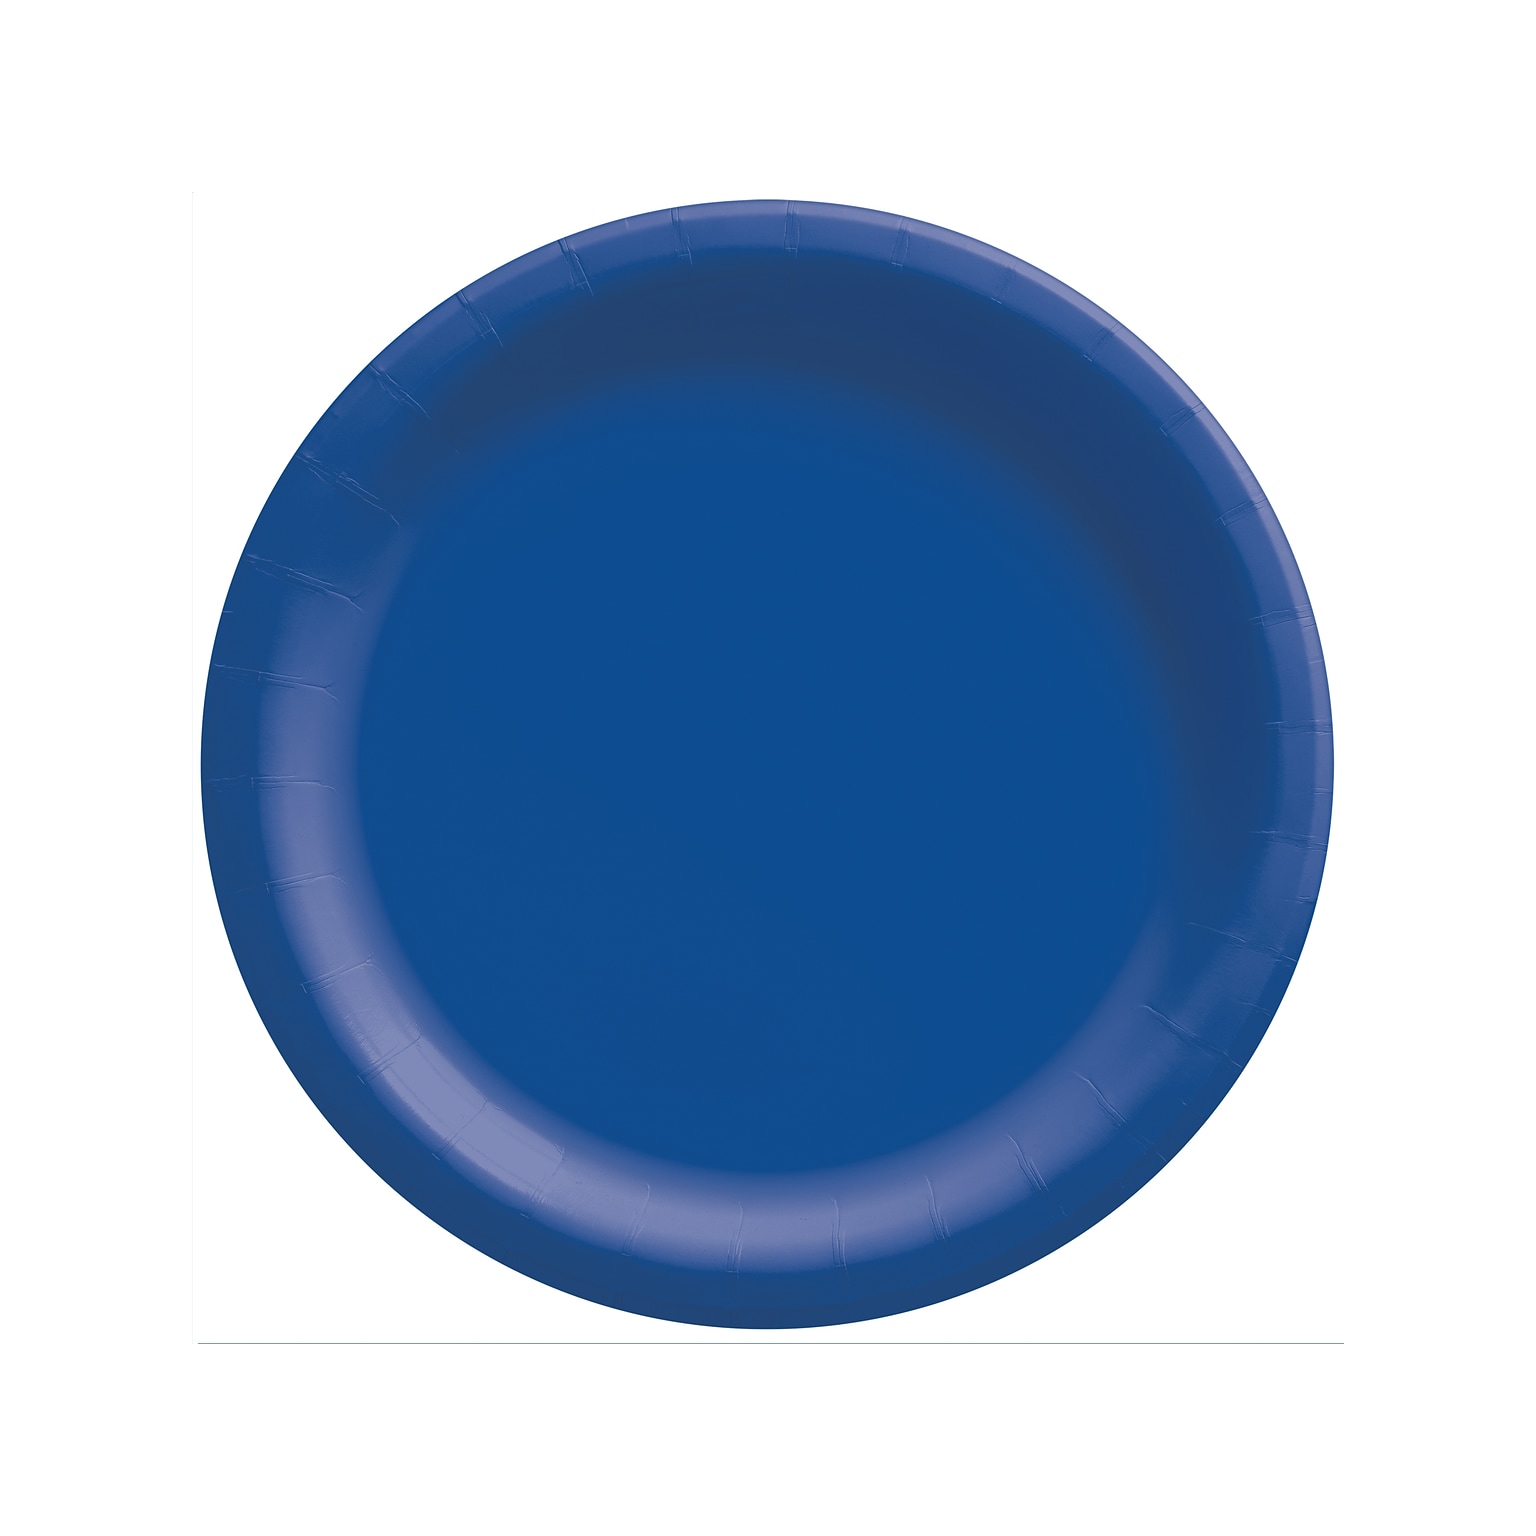 Amscan 8.5 Paper Plate, Bright Royal Blue, 50 Plates/Pack, 3 Packs/Set (650011.105)